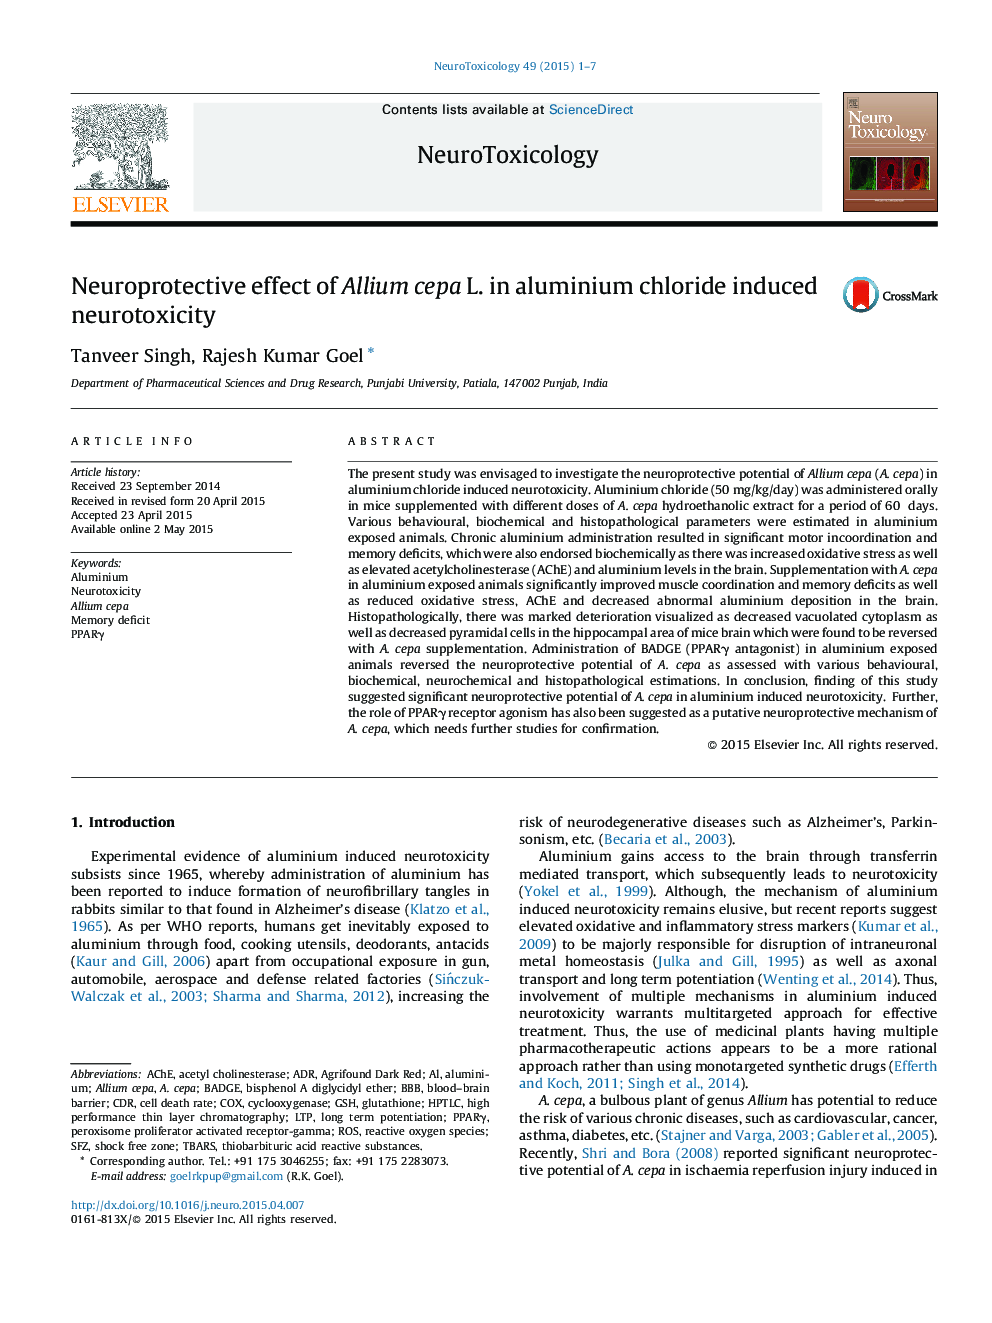 Neuroprotective effect of Allium cepa L. in aluminium chloride induced neurotoxicity